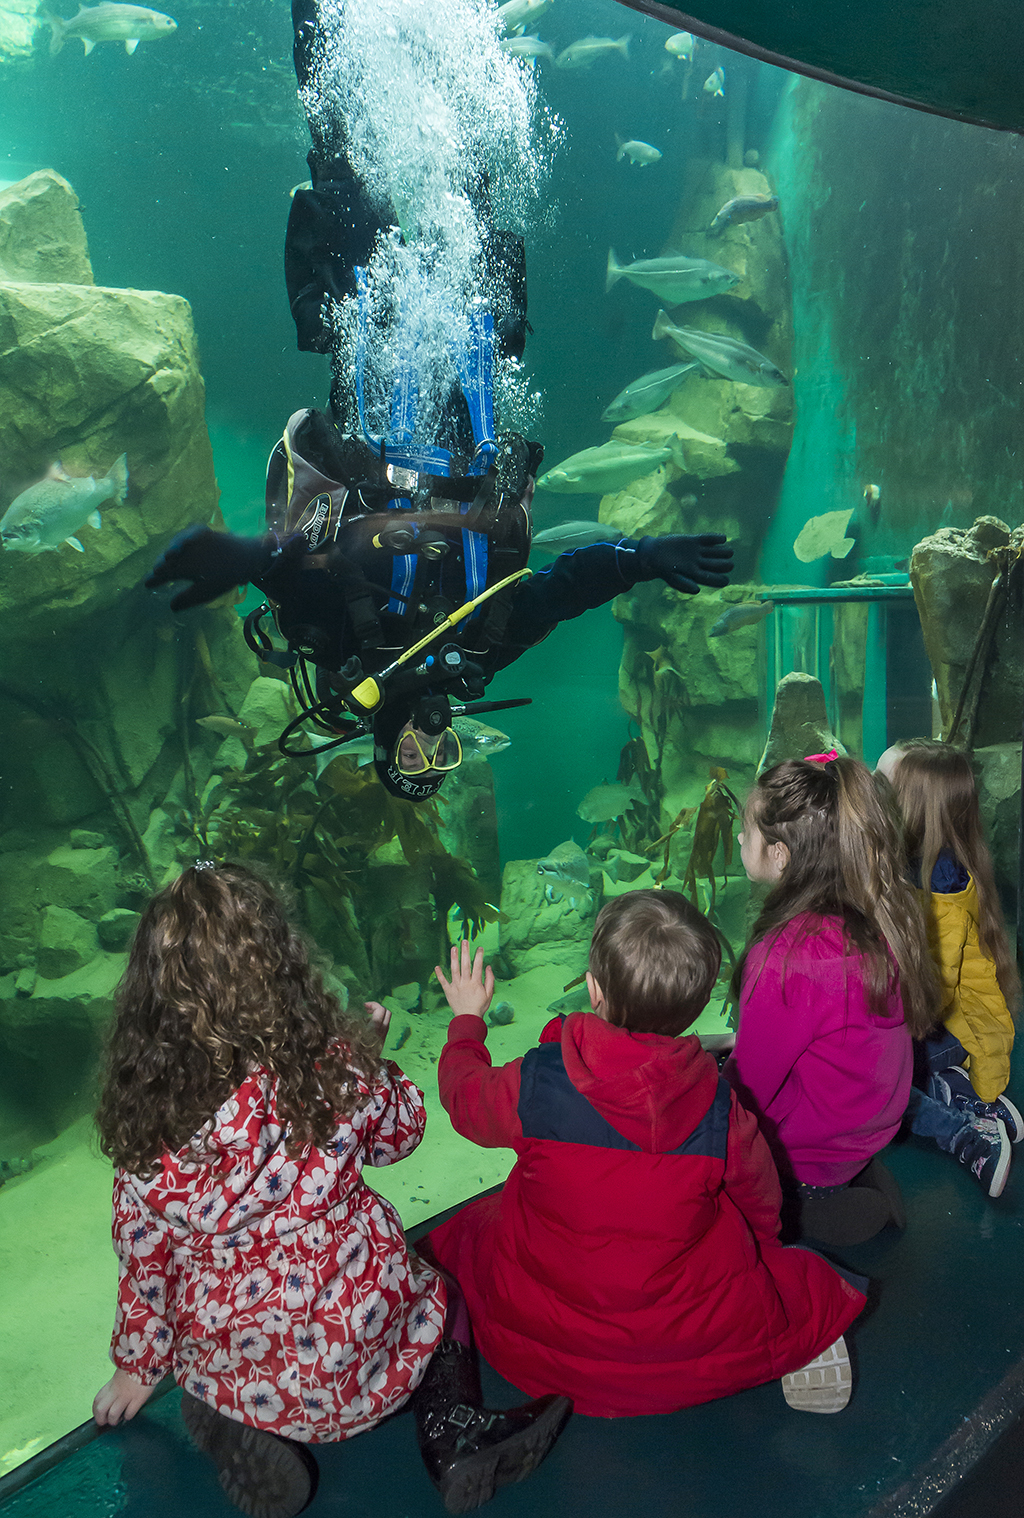 An upside down diver entertains children at Macduff Aquarium